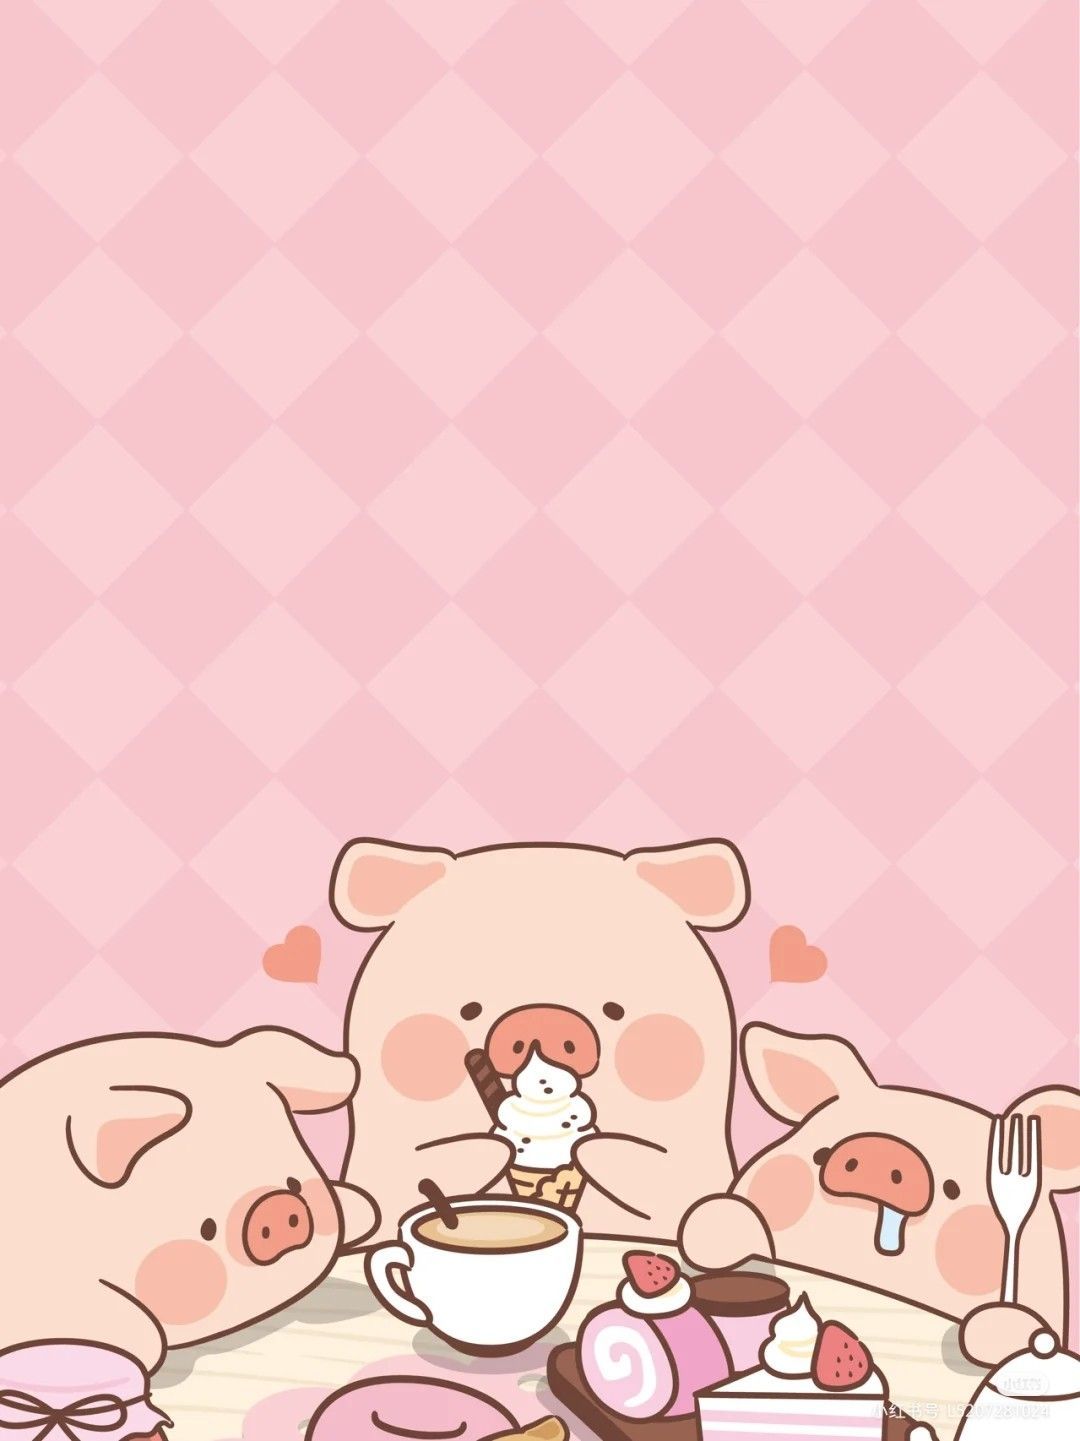 Lulu猪壁纸. Pig wallpaper, Pig illustration, Cute drawings